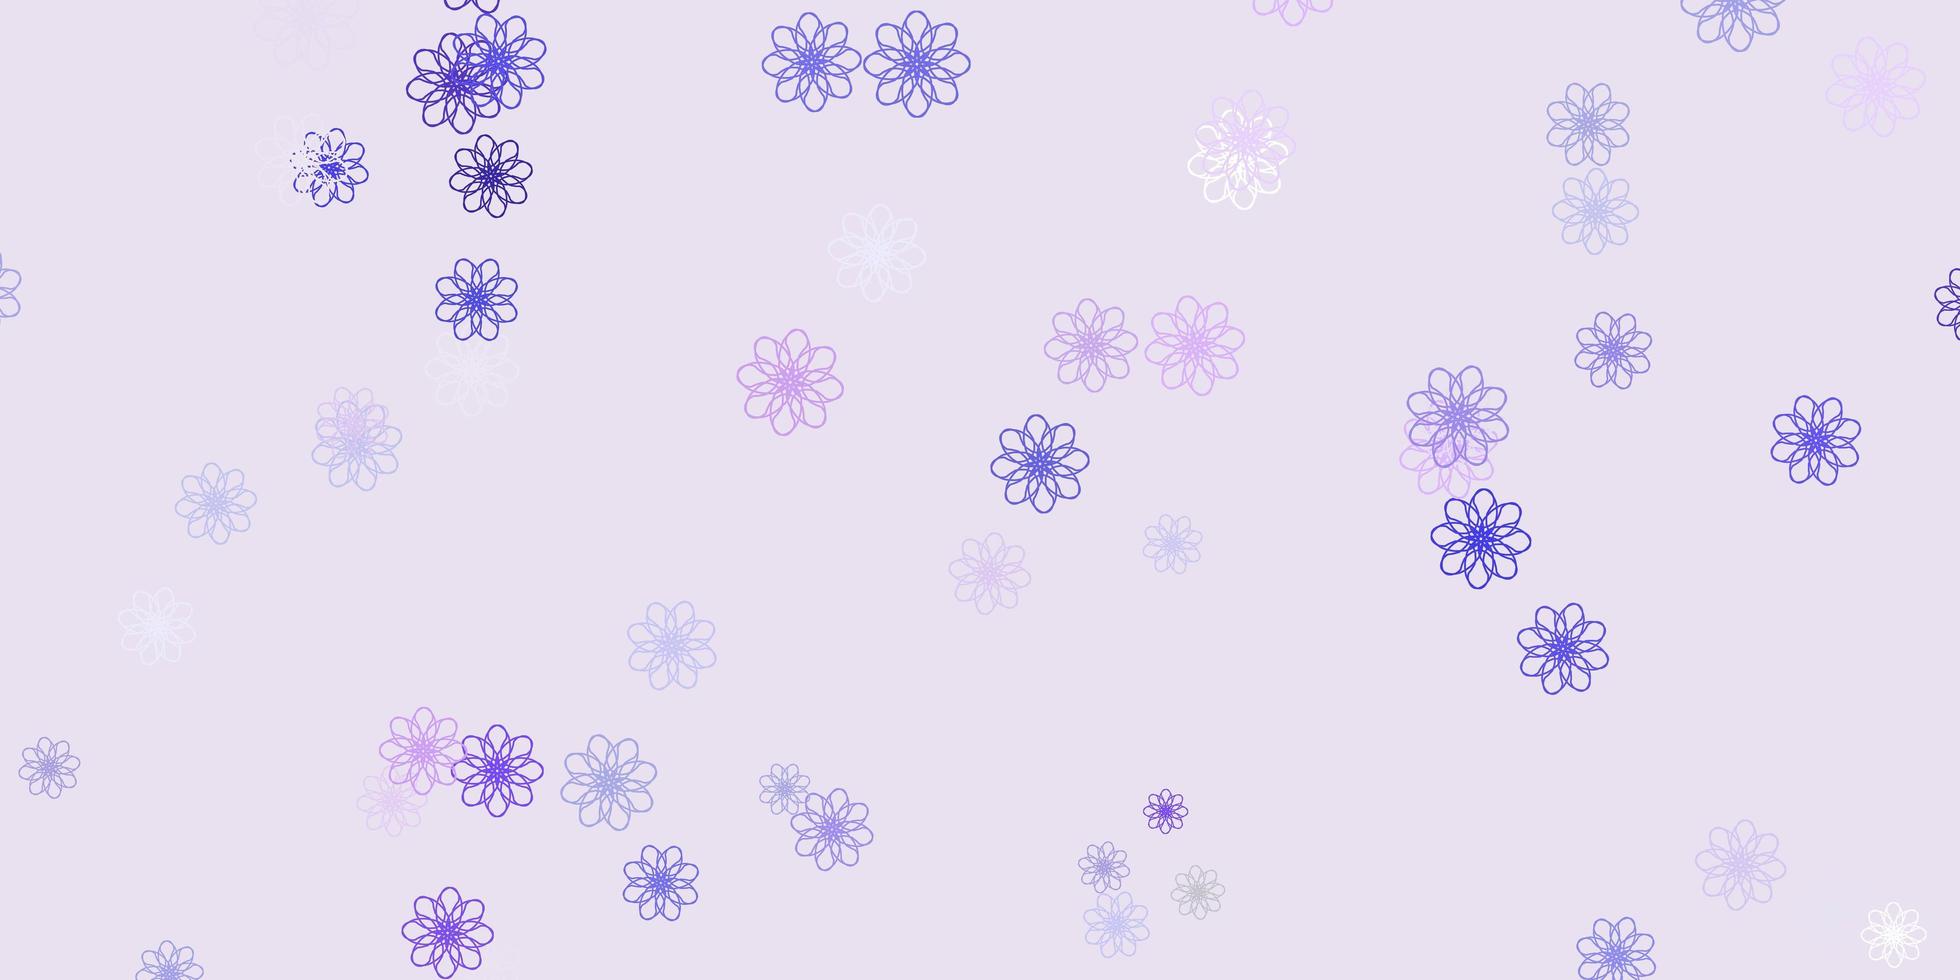 ljuslila vektor doodle mall med blommor.